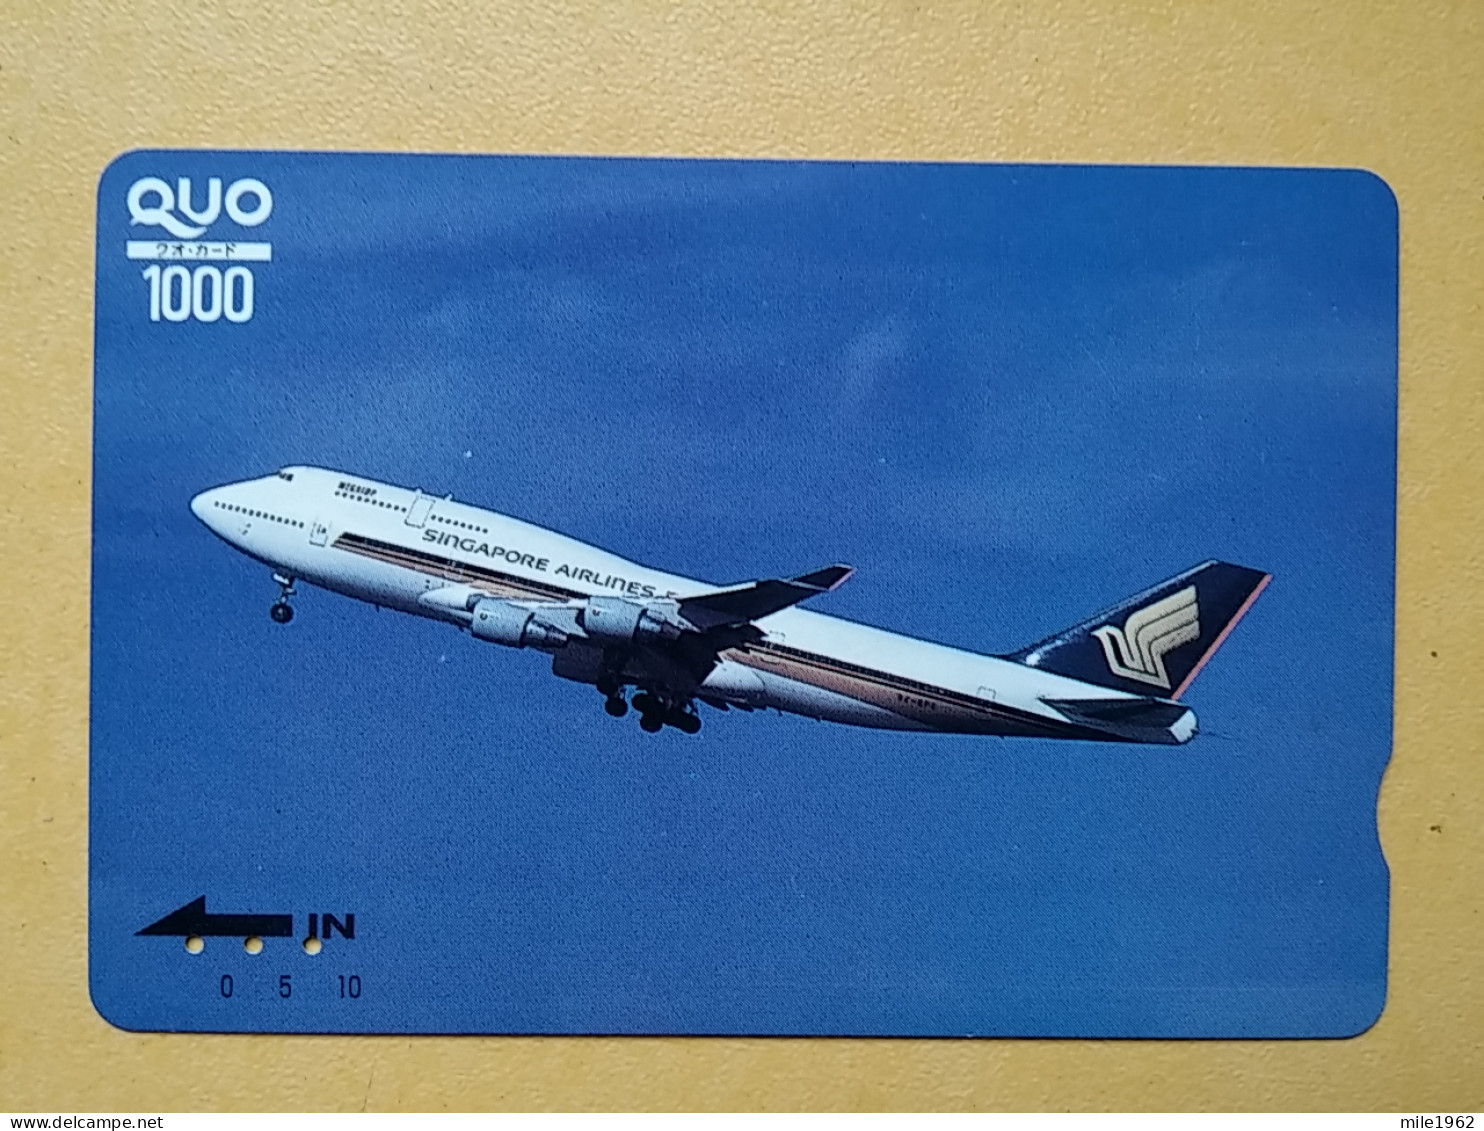 T-443 - JAPAN, Japon, Nipon, Carte Prepayee, Prepaid Card, Avion, Plane, Avio - Avions